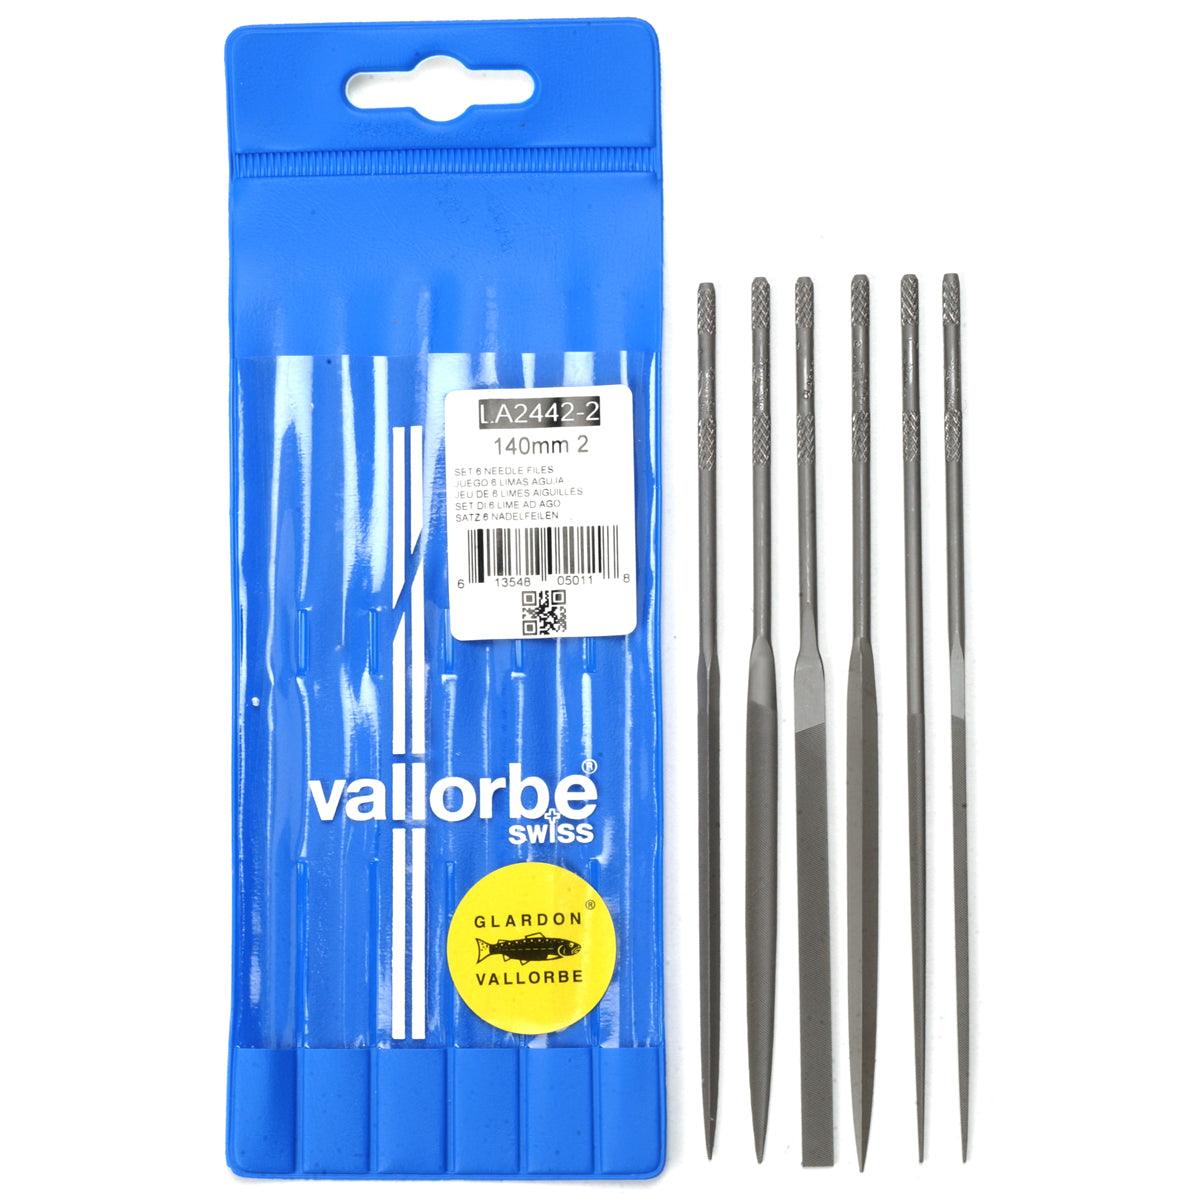 Glardon-Vallorbe LA2442-2 Needle File Set of 6-5-1/2 (140mm) Cut